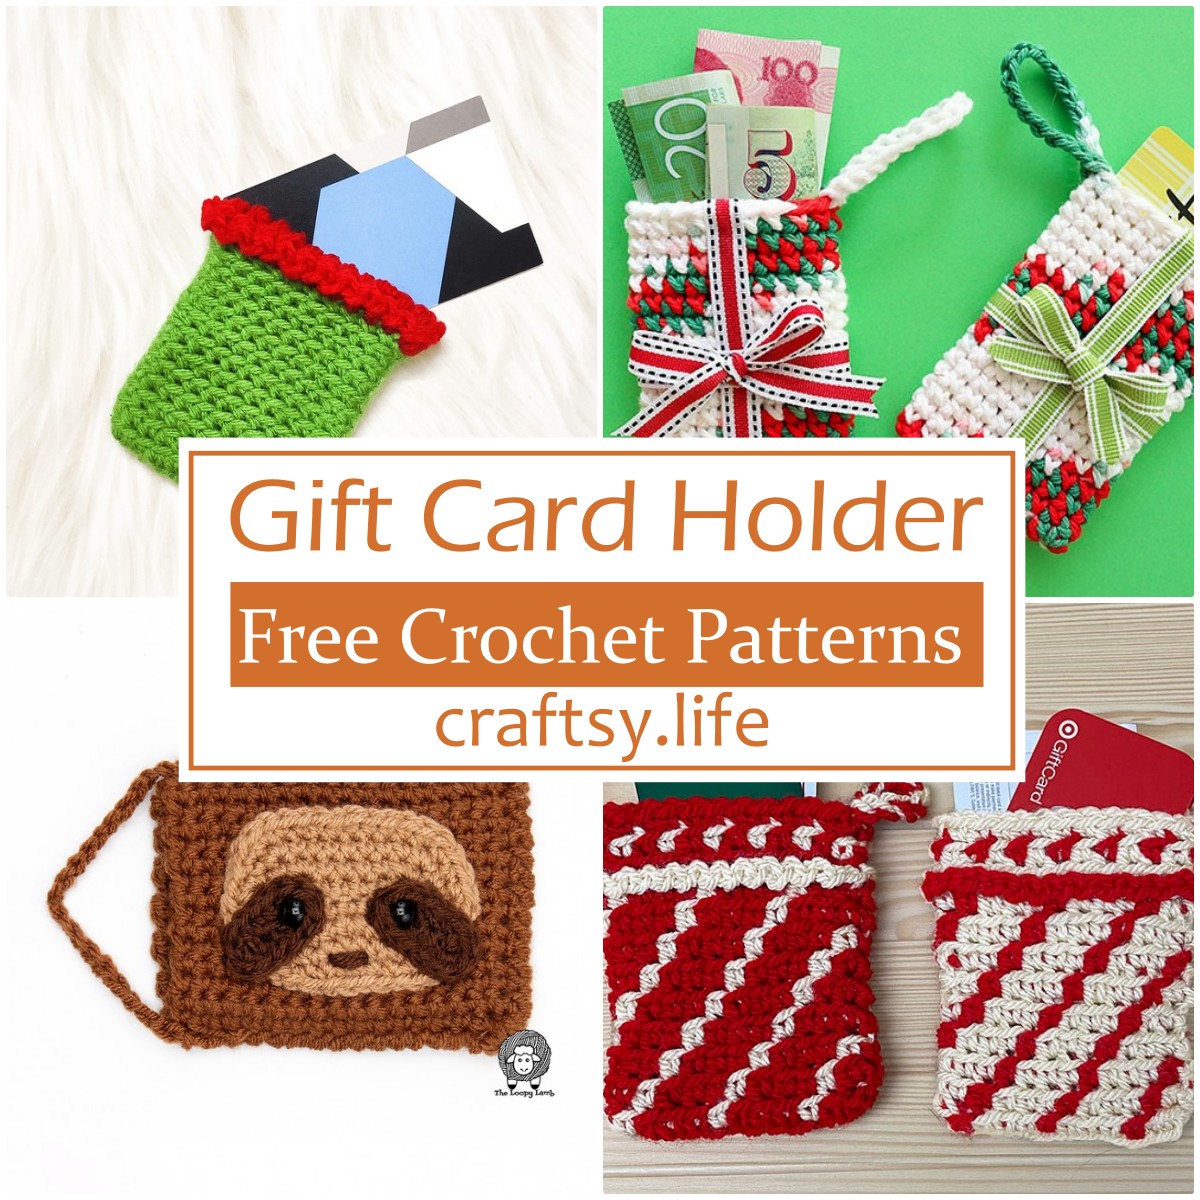 Crochet Gift Card Holder Patterns